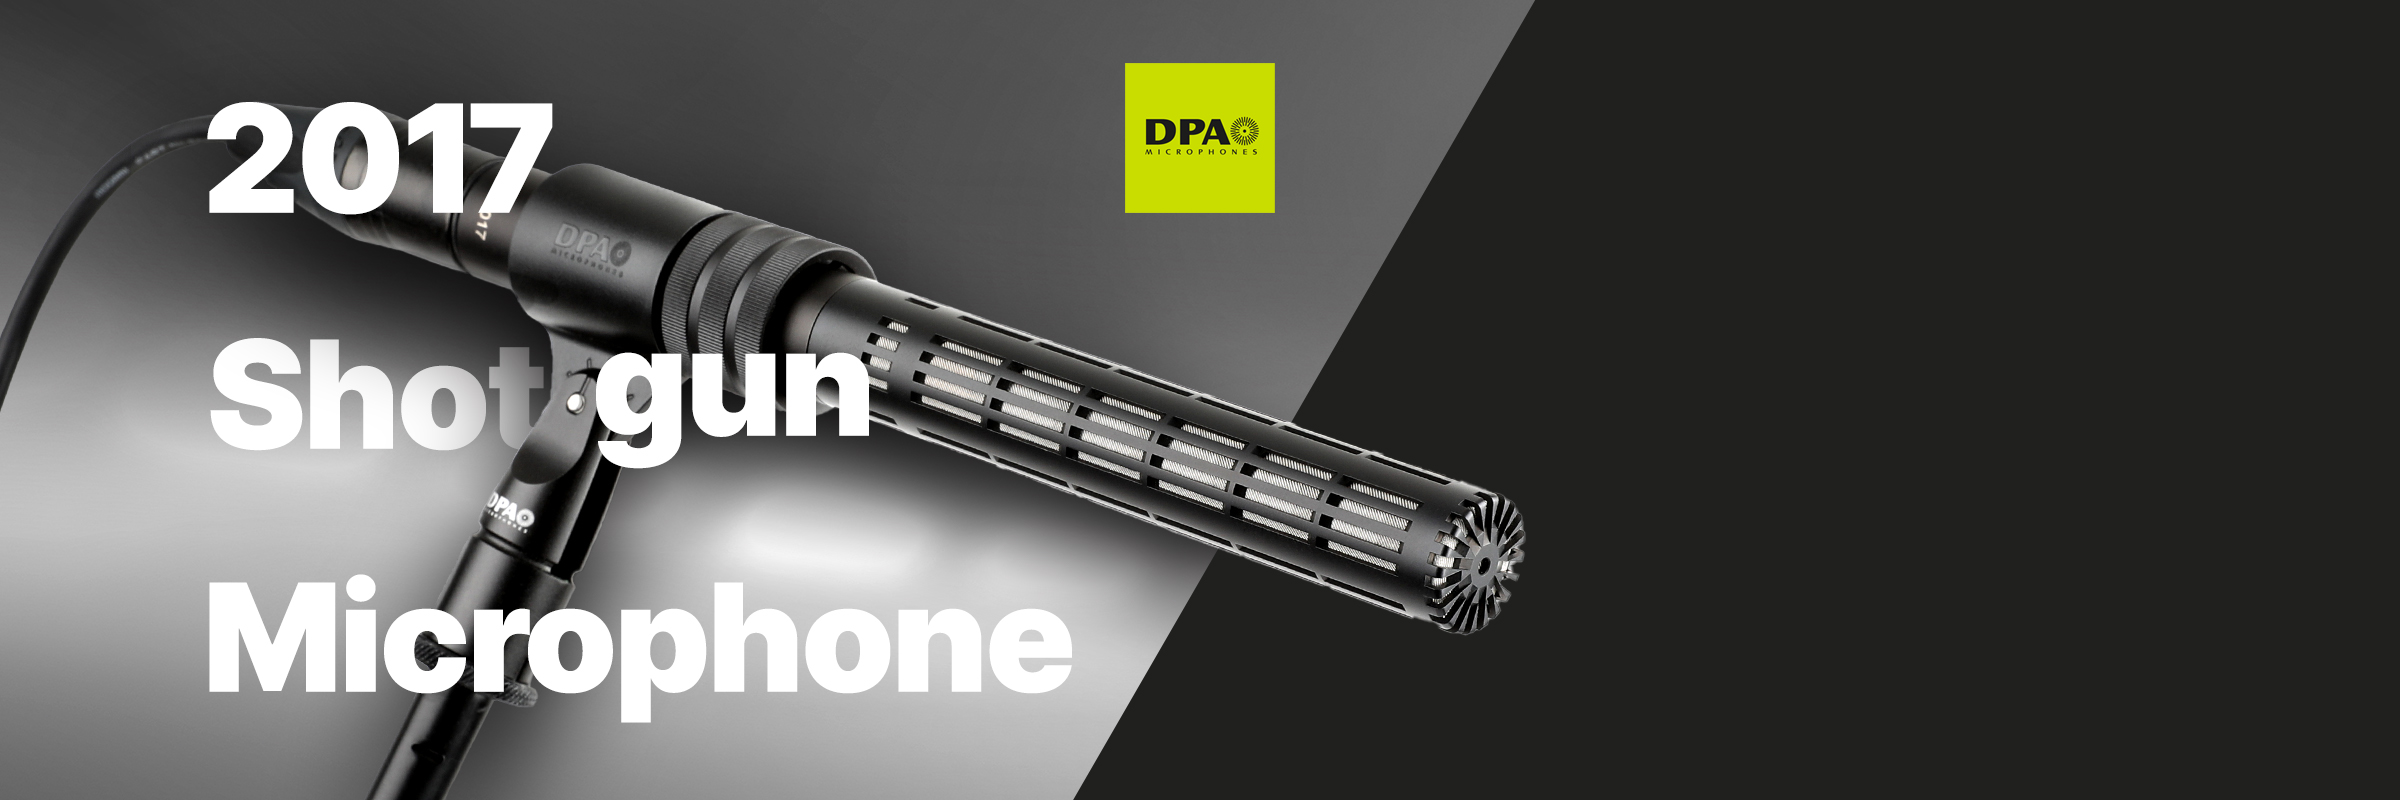 Experience the new DPA 2017 Shotgun Microphone